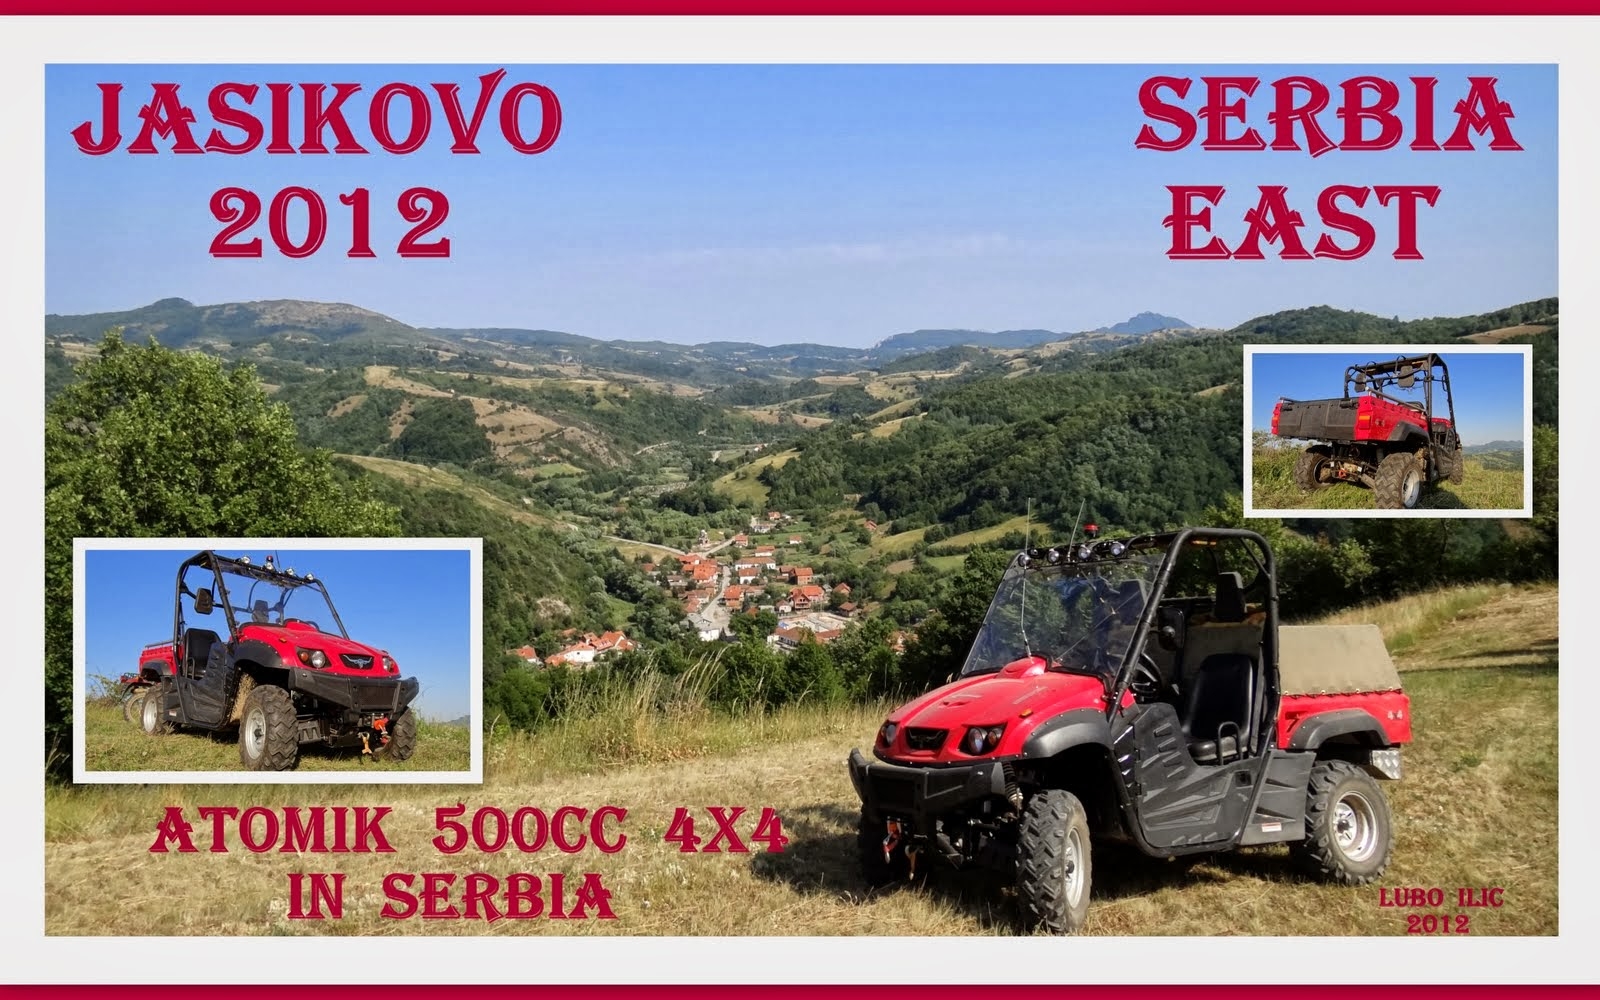 Atomik In East Serbia - Jasikovo 2012 cover image